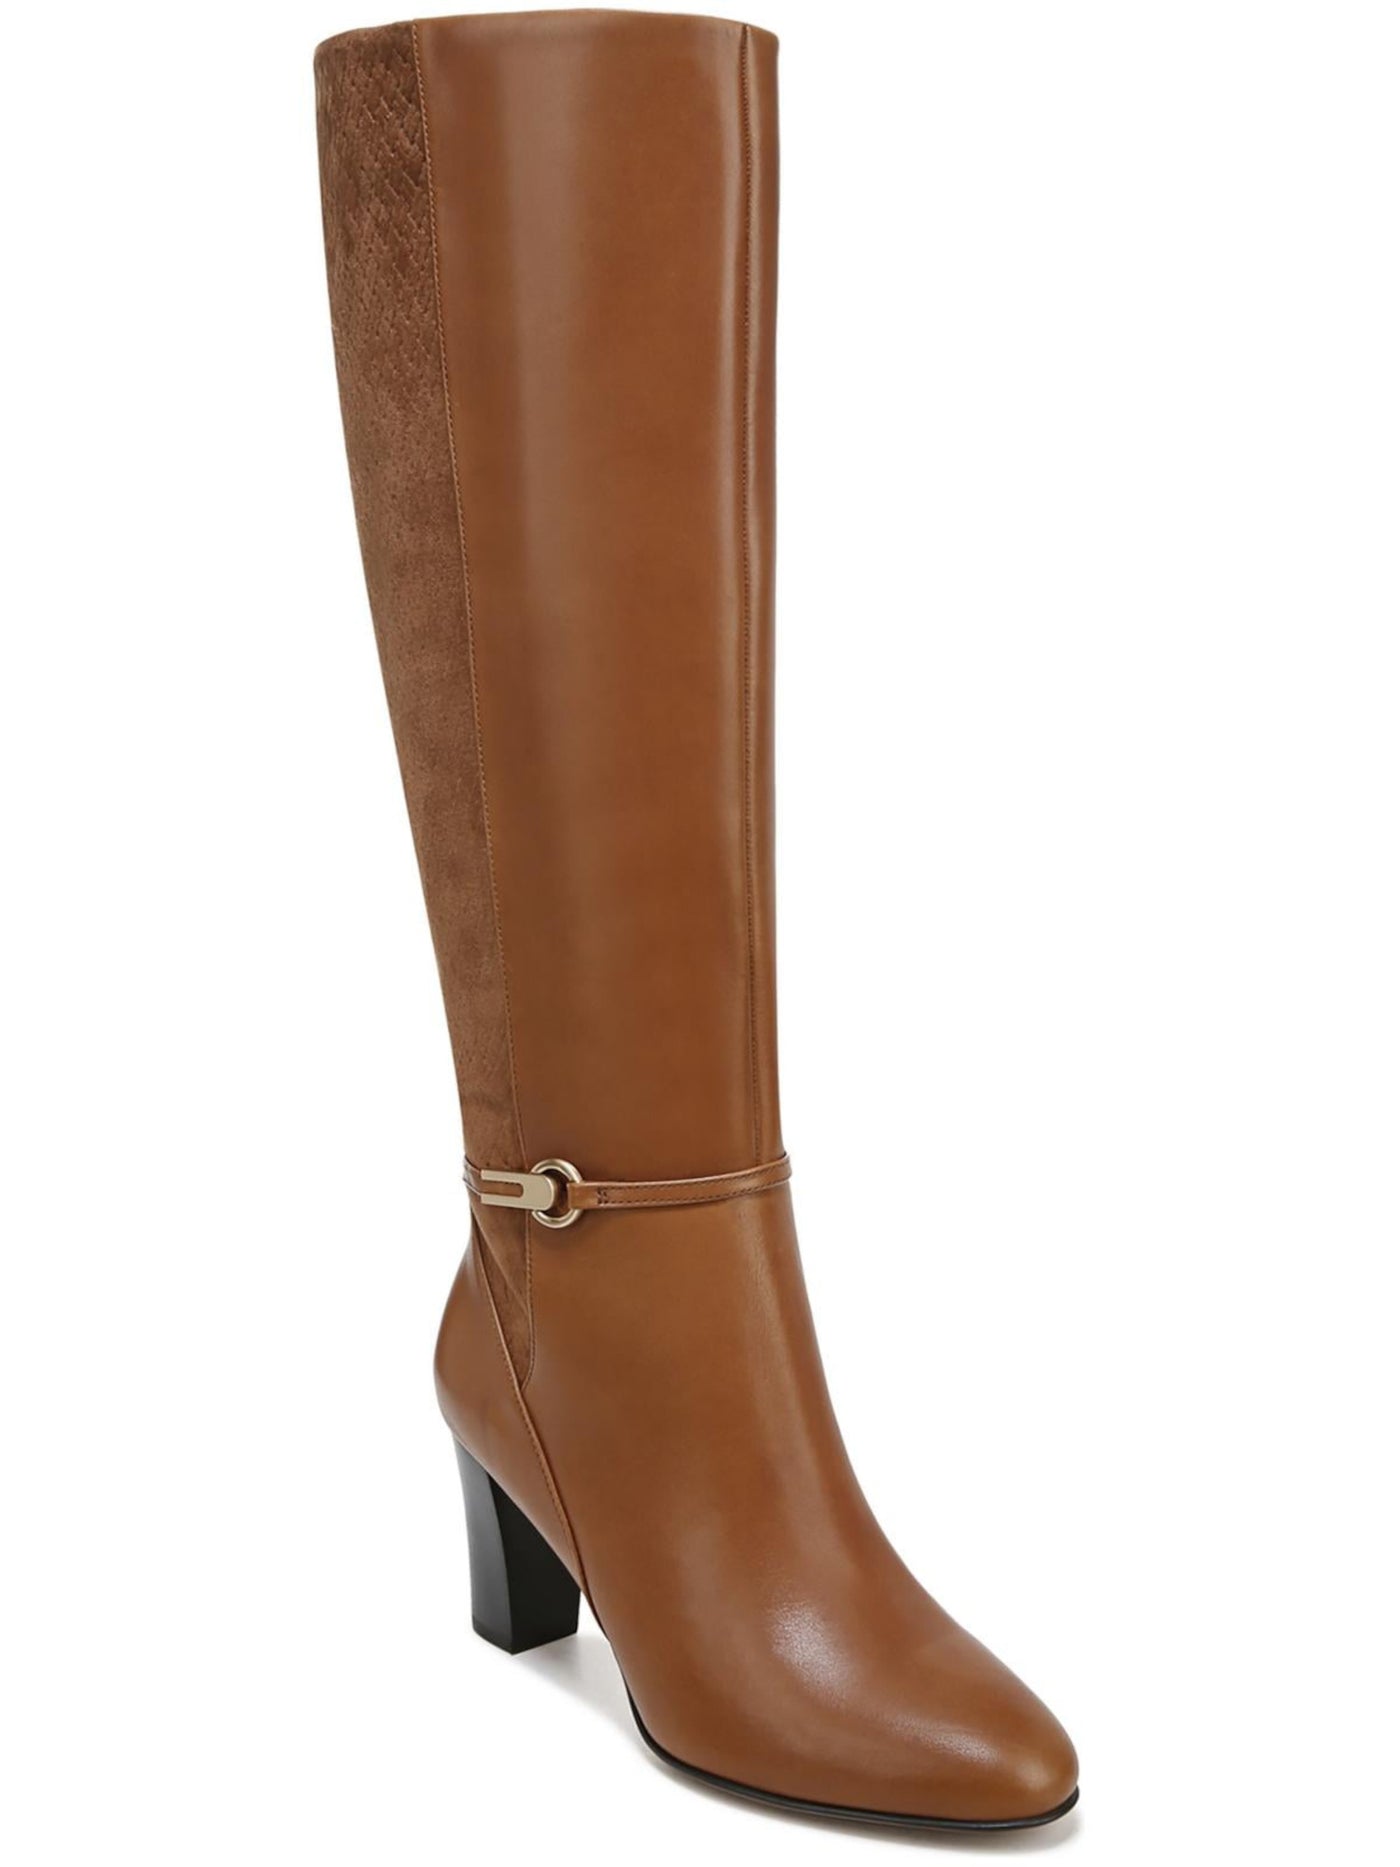 FRANCO SARTO Womens Brown Comfort Palermo Almond Toe Block Heel Zip-Up Leather Dress Boots 6 M